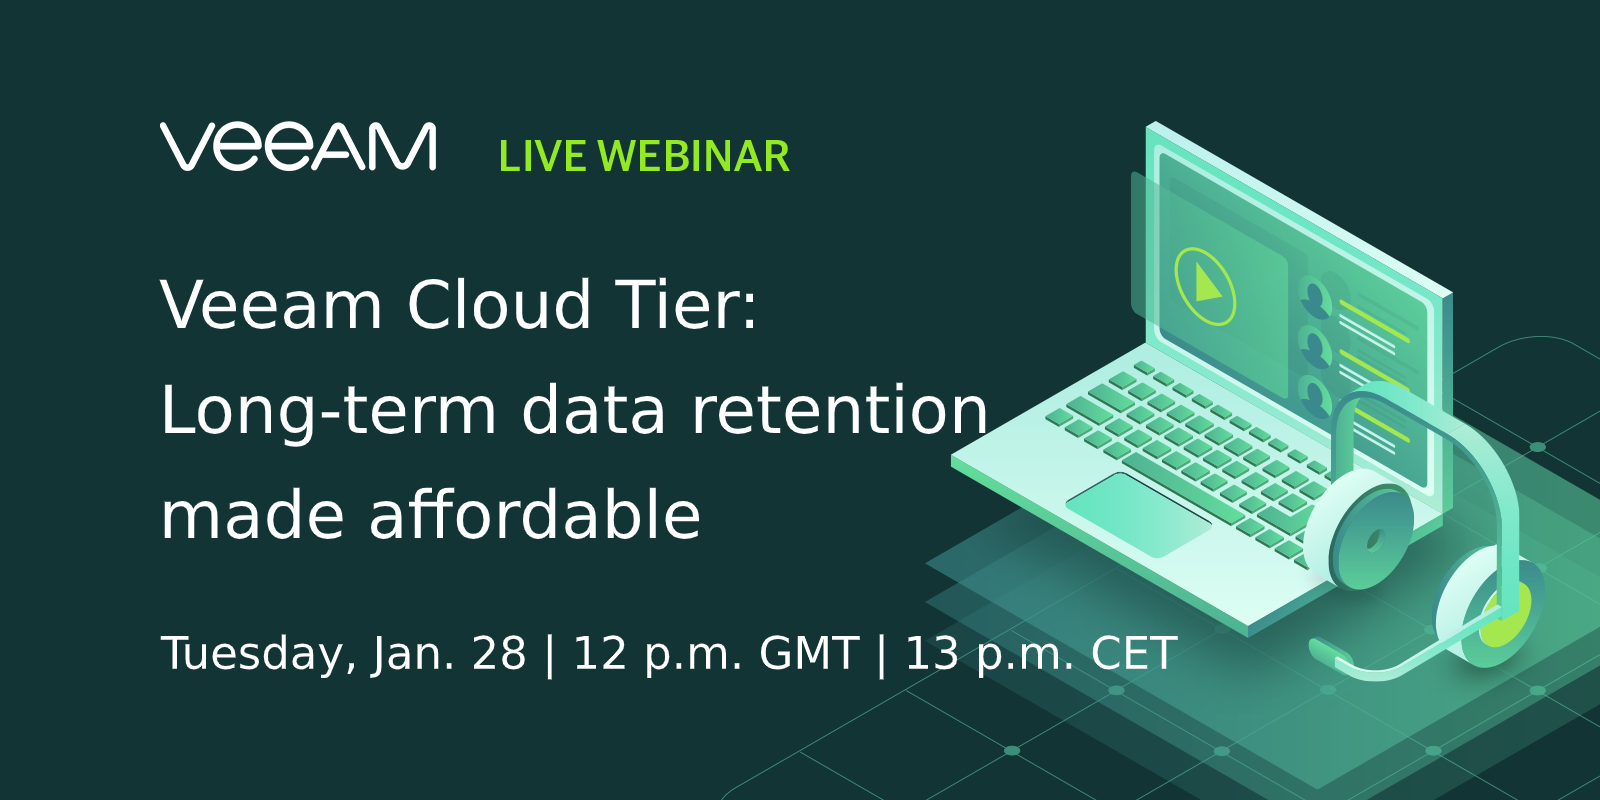 Veeam Cloud Tier: Long-term data retention made affordable